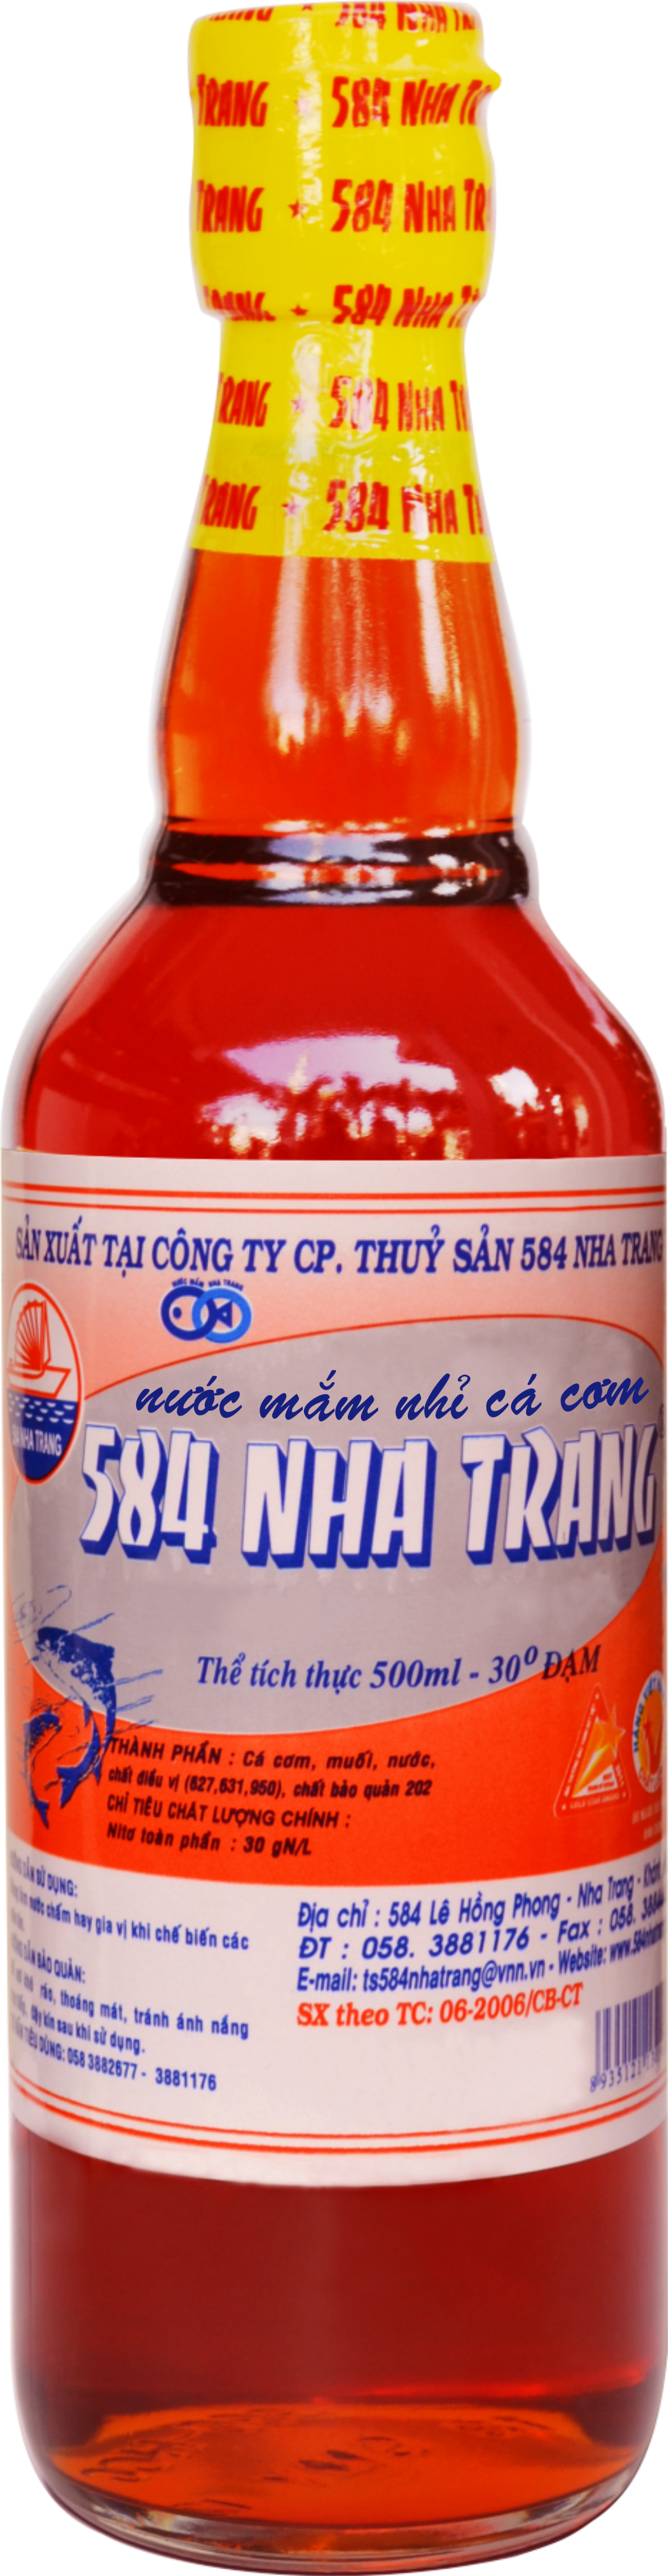 584 Fish Sauce Nha Trang 30oN glass bottle  500ml 